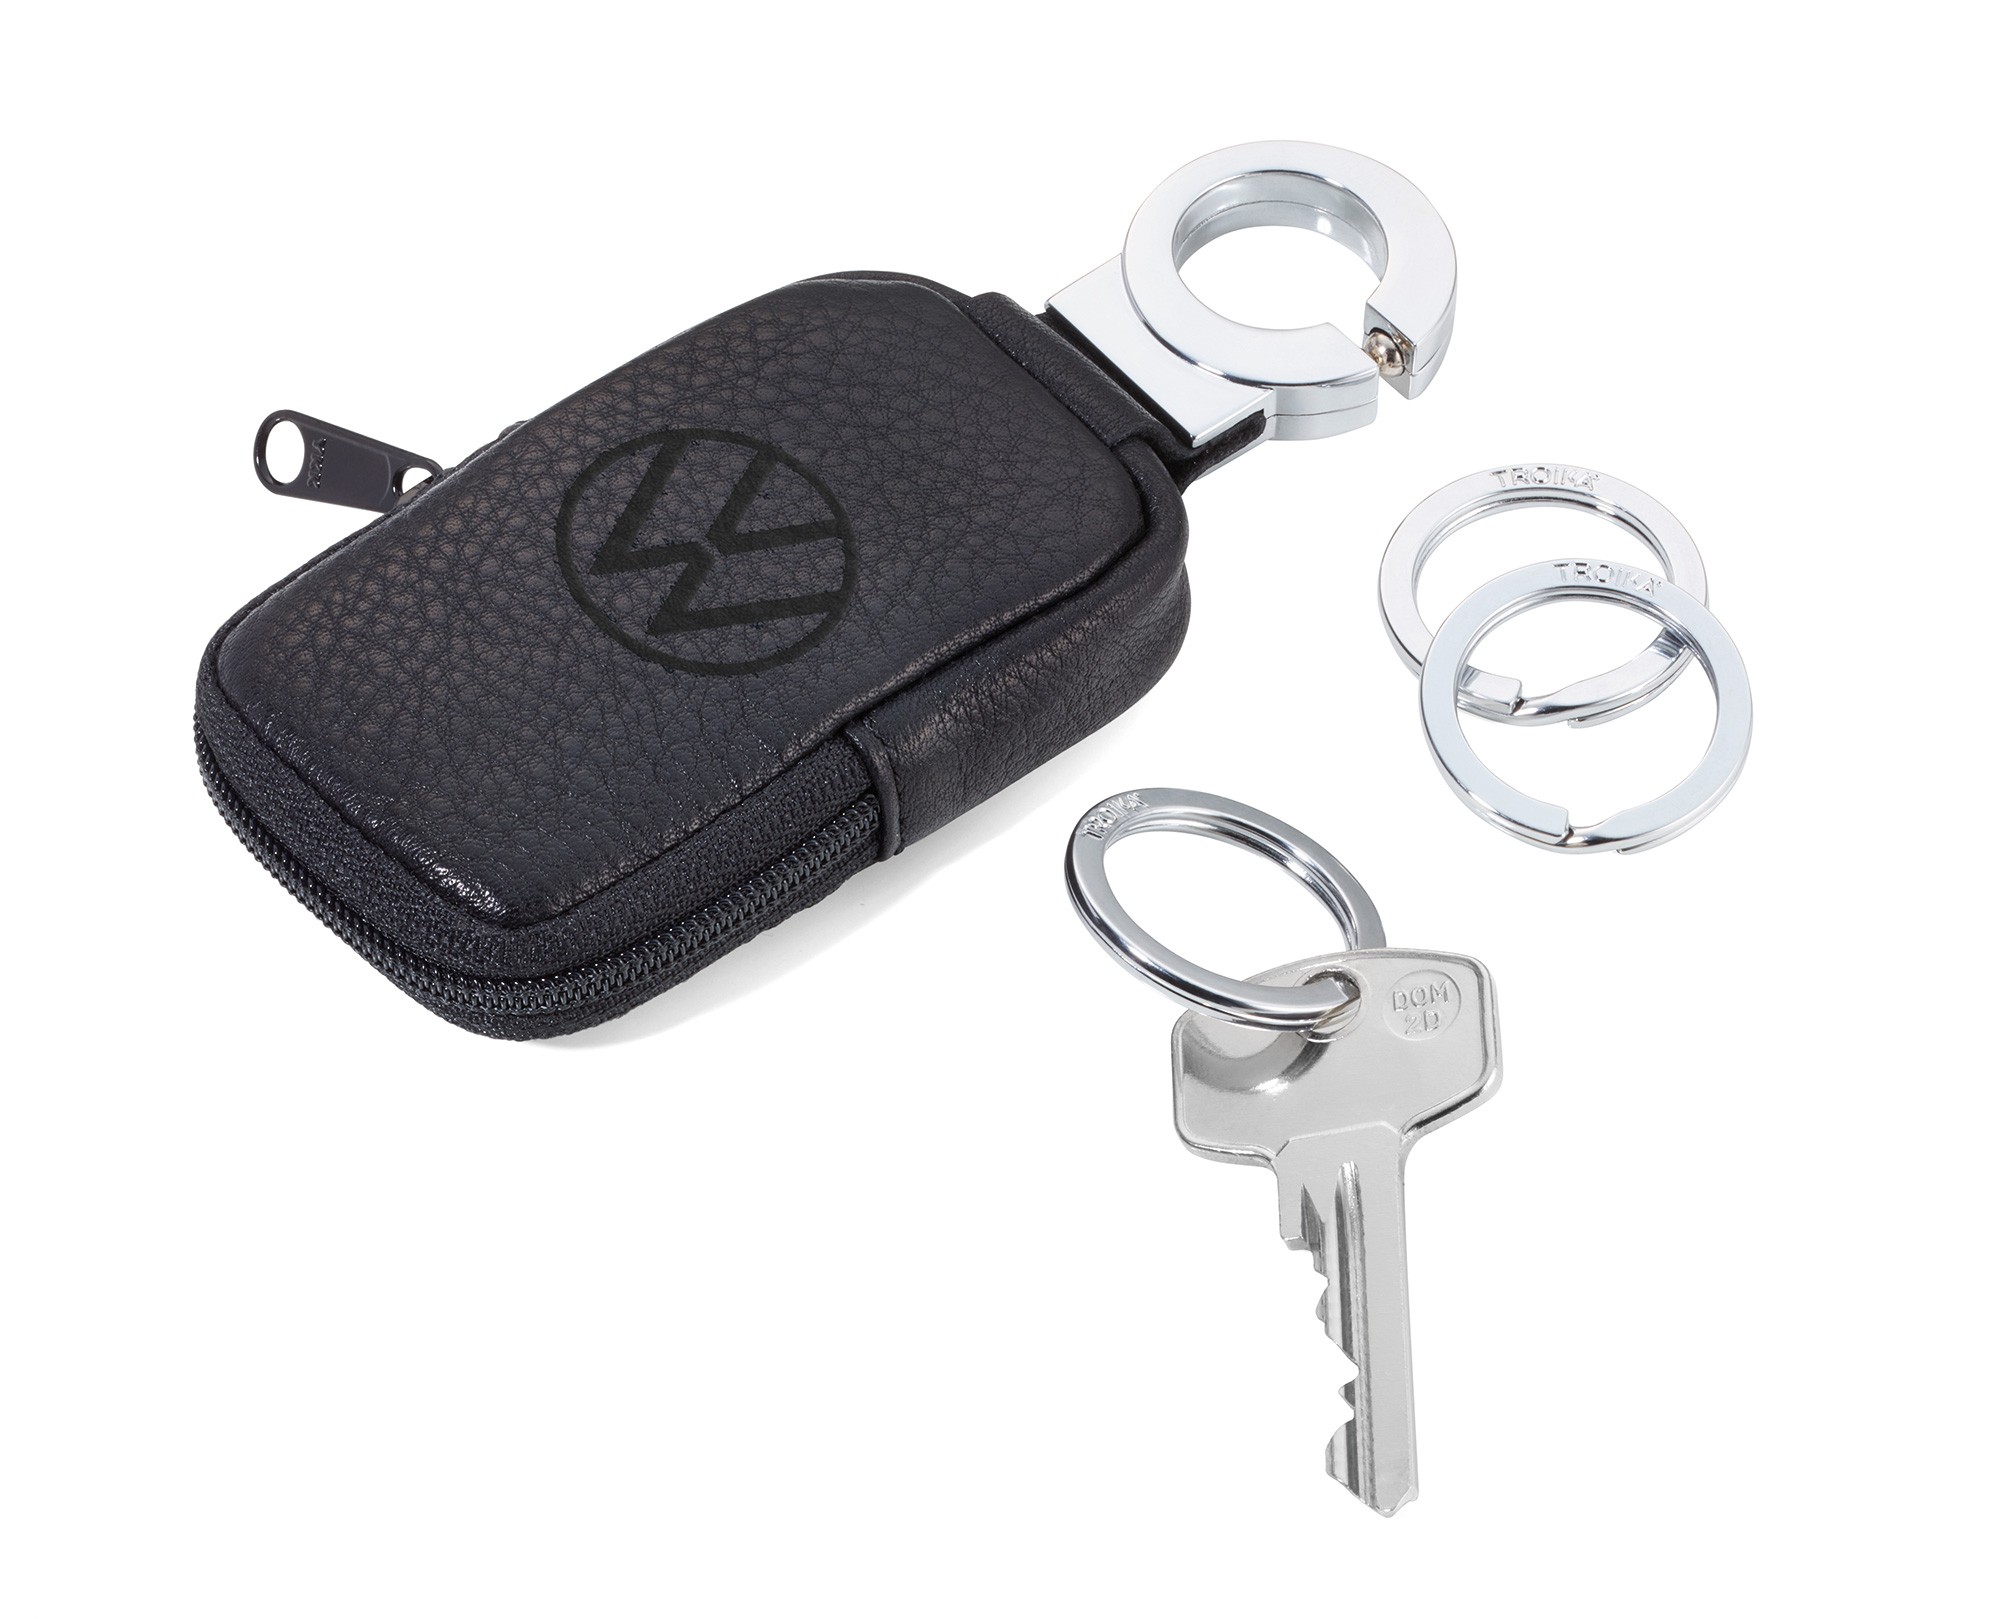 Schlüsselanhänger VW VOLKSWAGEN KEYRING bedruckt als Werbeartikel 876432511